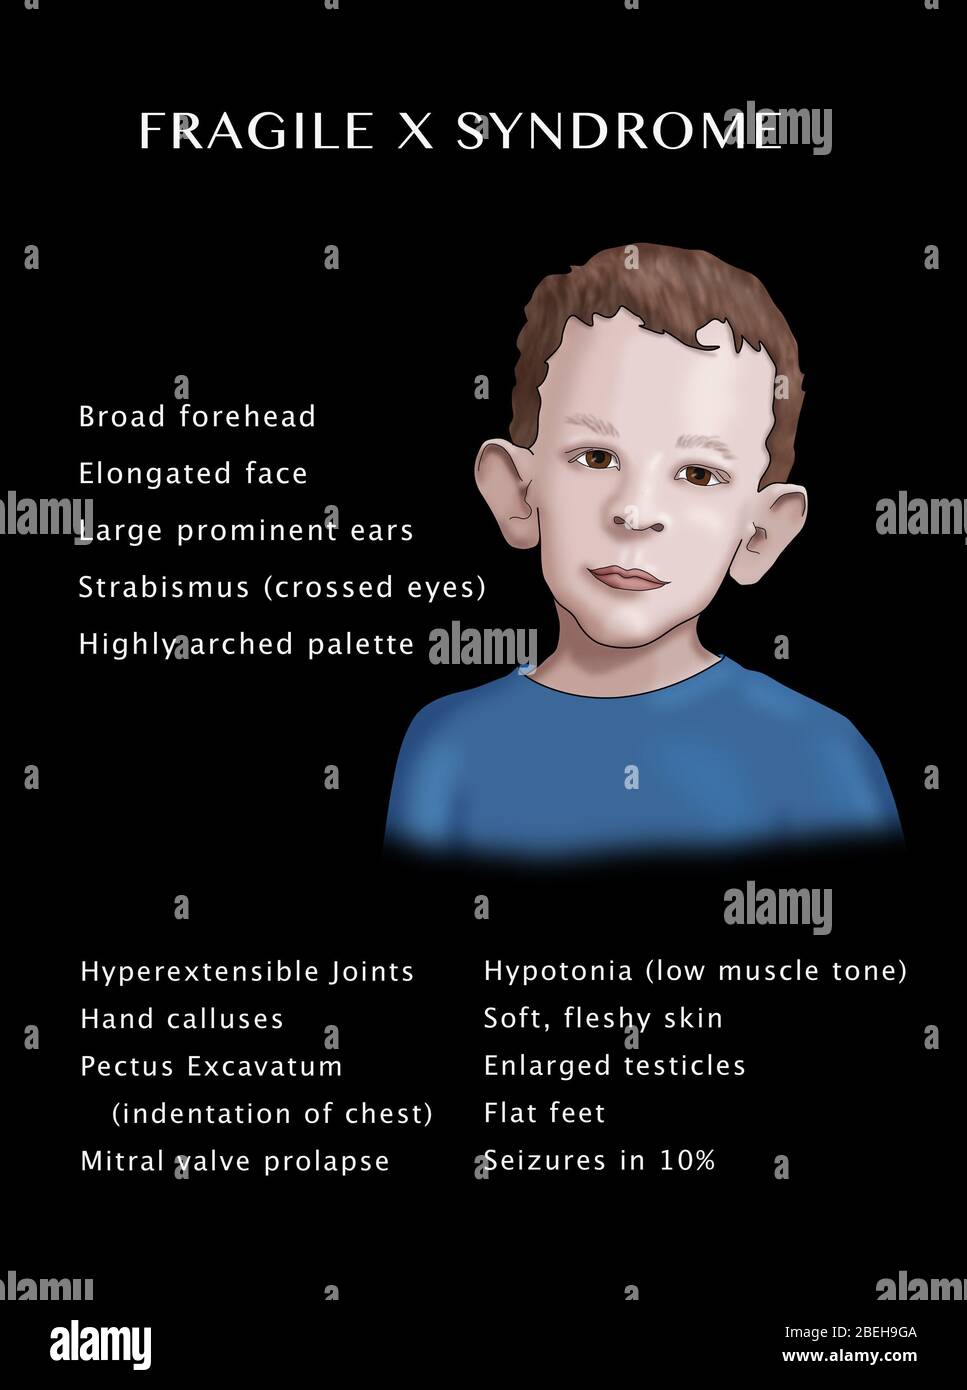 Fragile X Syndrome Characteristics